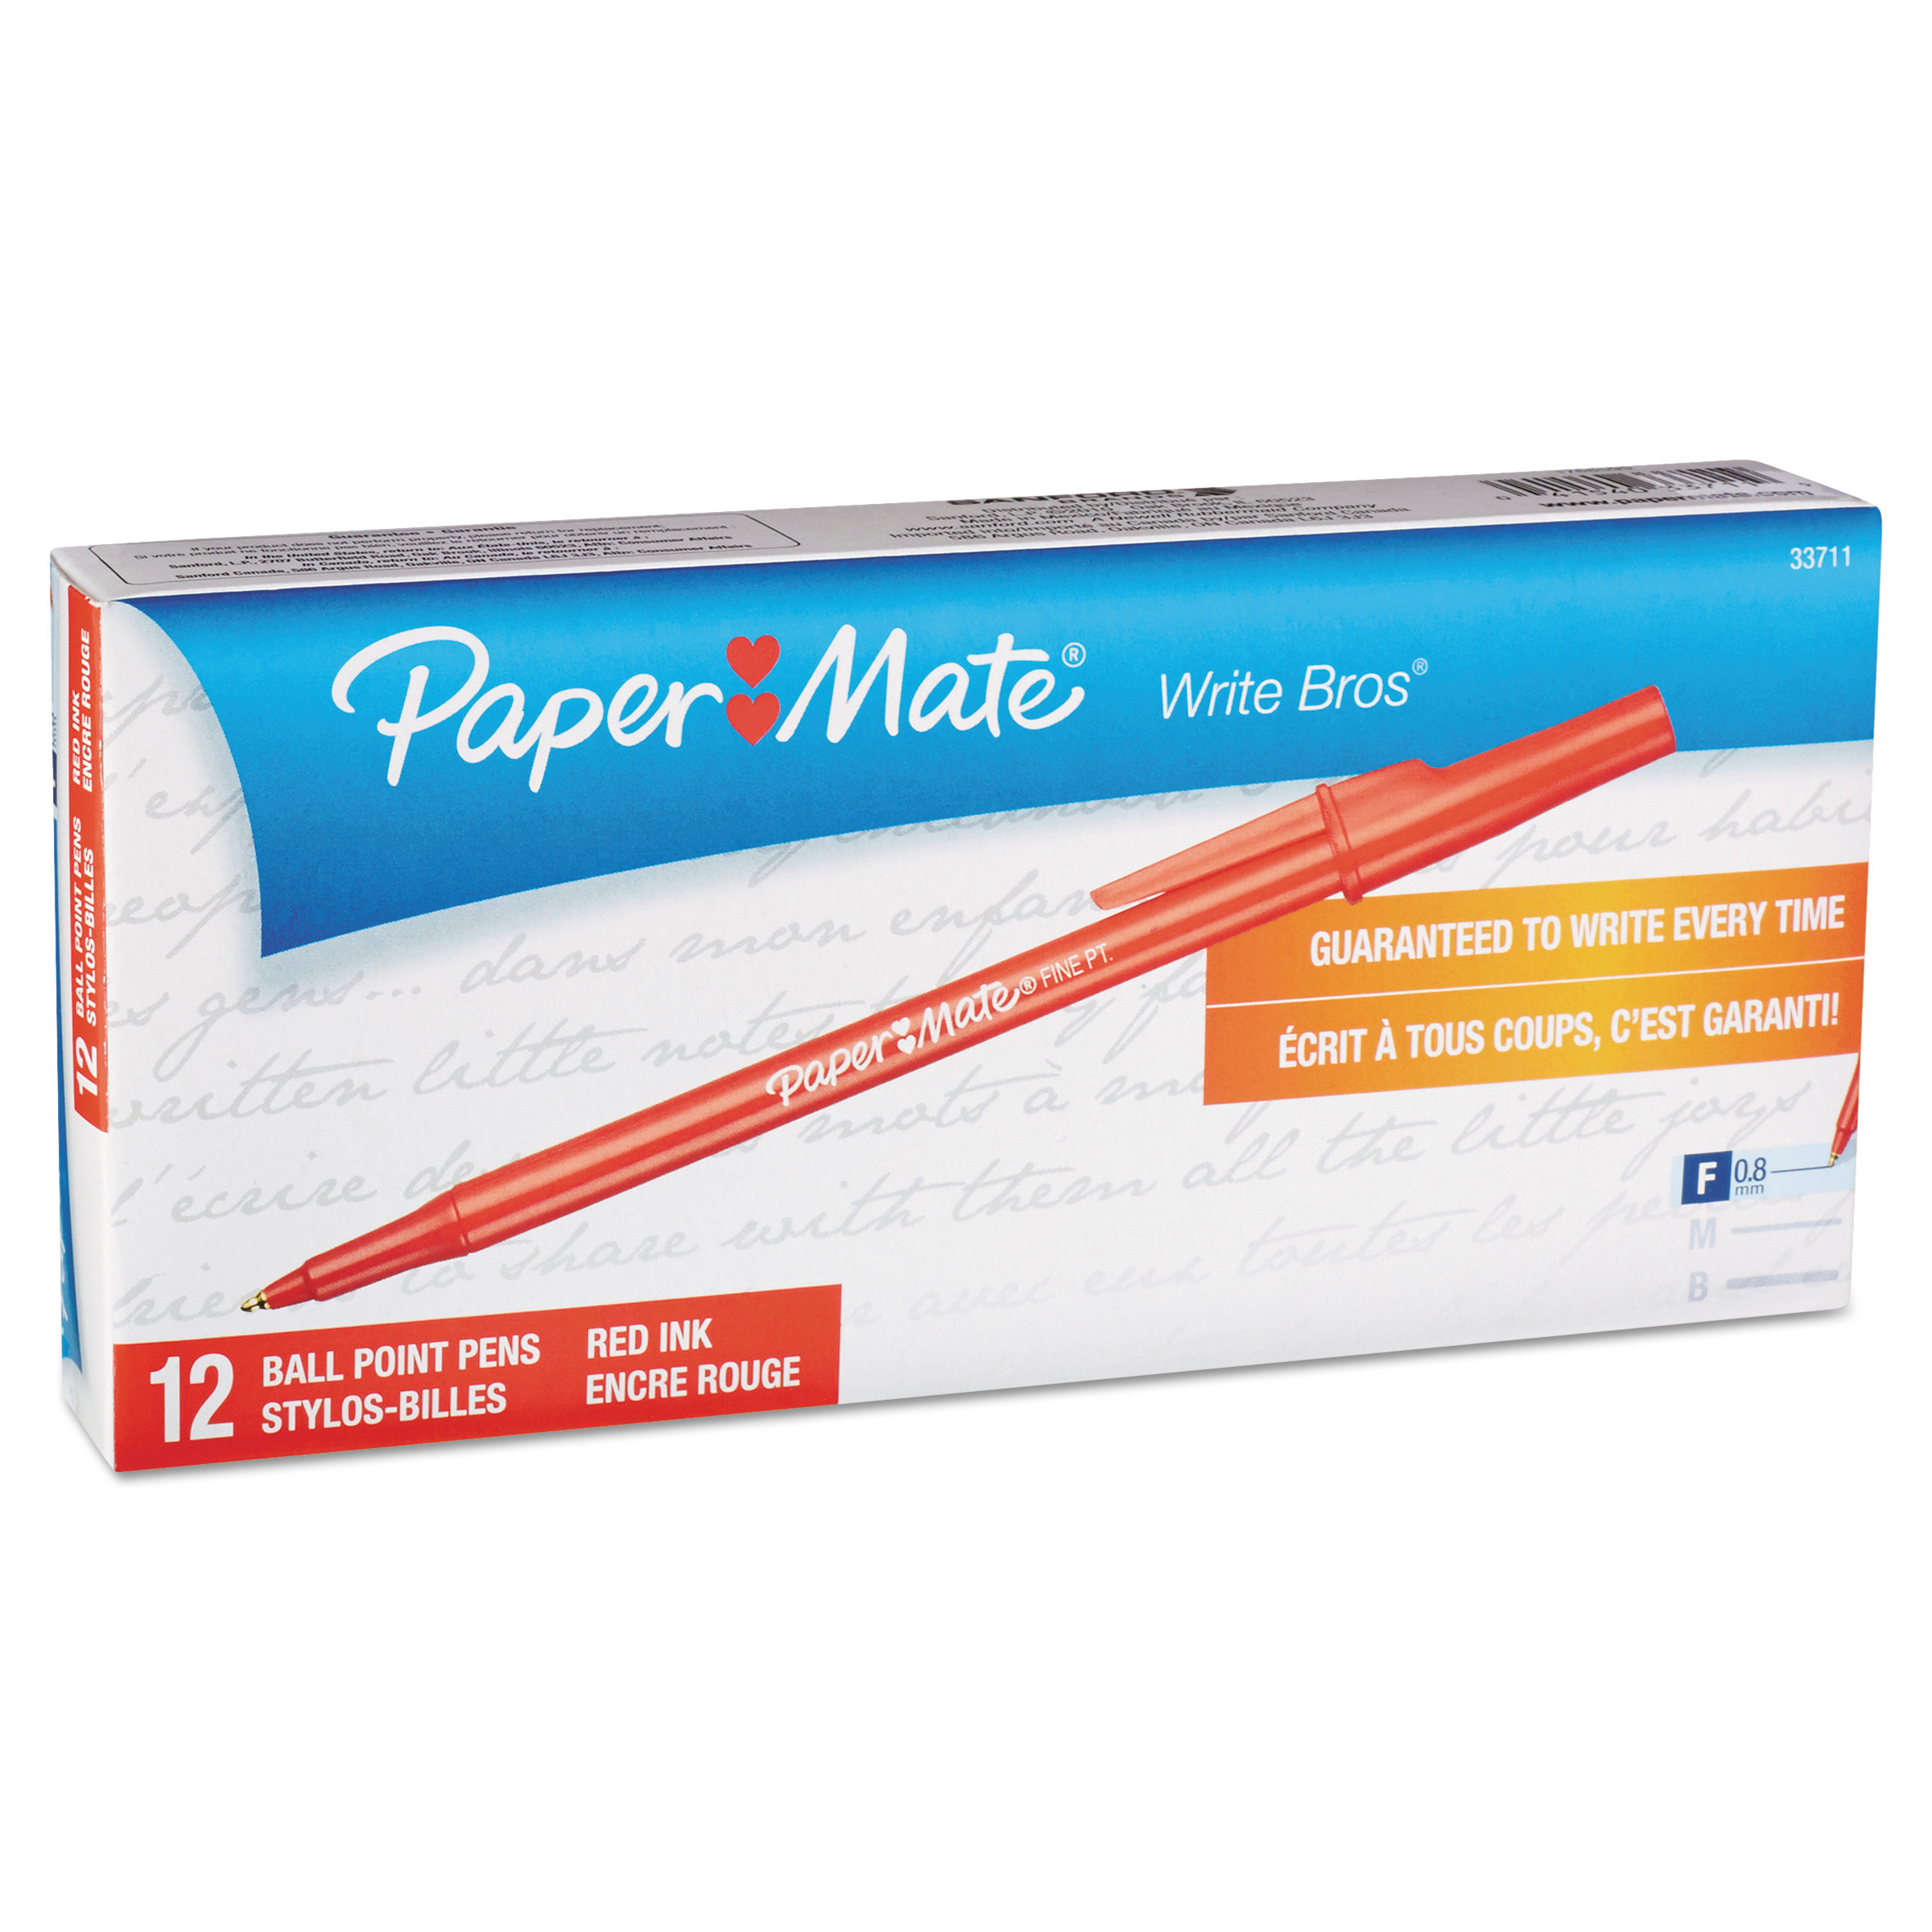 Paper Mate Write Bros Stick Ballpoint Pen, Red Ink, 0.8mm, Dozen - image 1 of 11